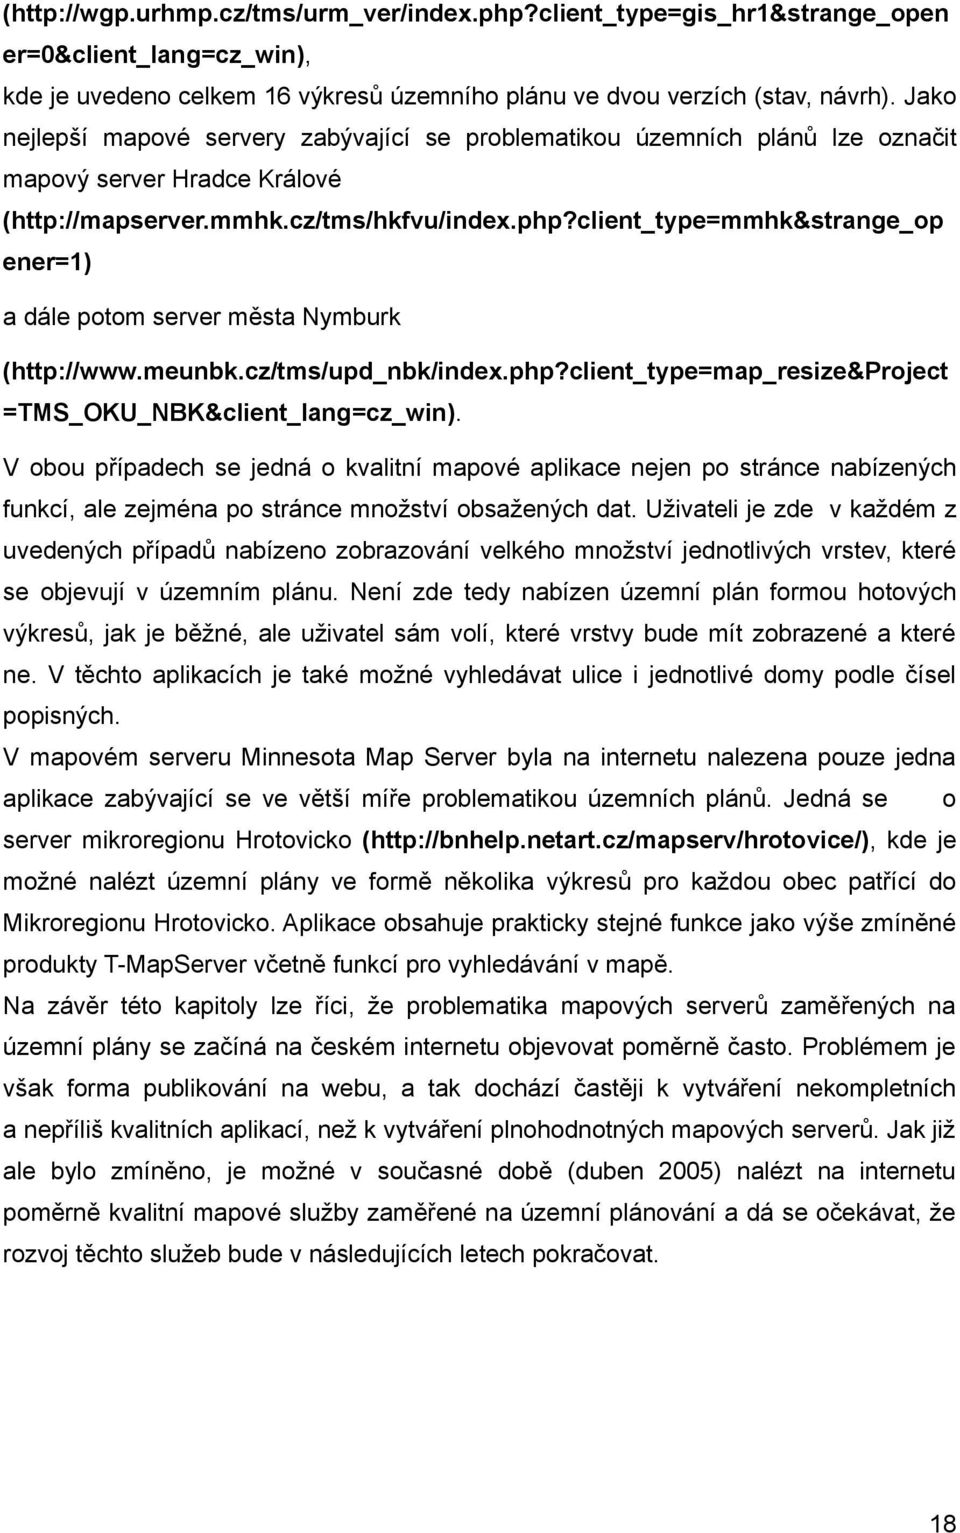 client_type=mmhk&strange_op ener=1) a dále potom server města Nymburk (http://www.meunbk.cz/tms/upd_nbk/index.php?client_type=map_resize&project =TMS_OKU_NBK&client_lang=cz_win).